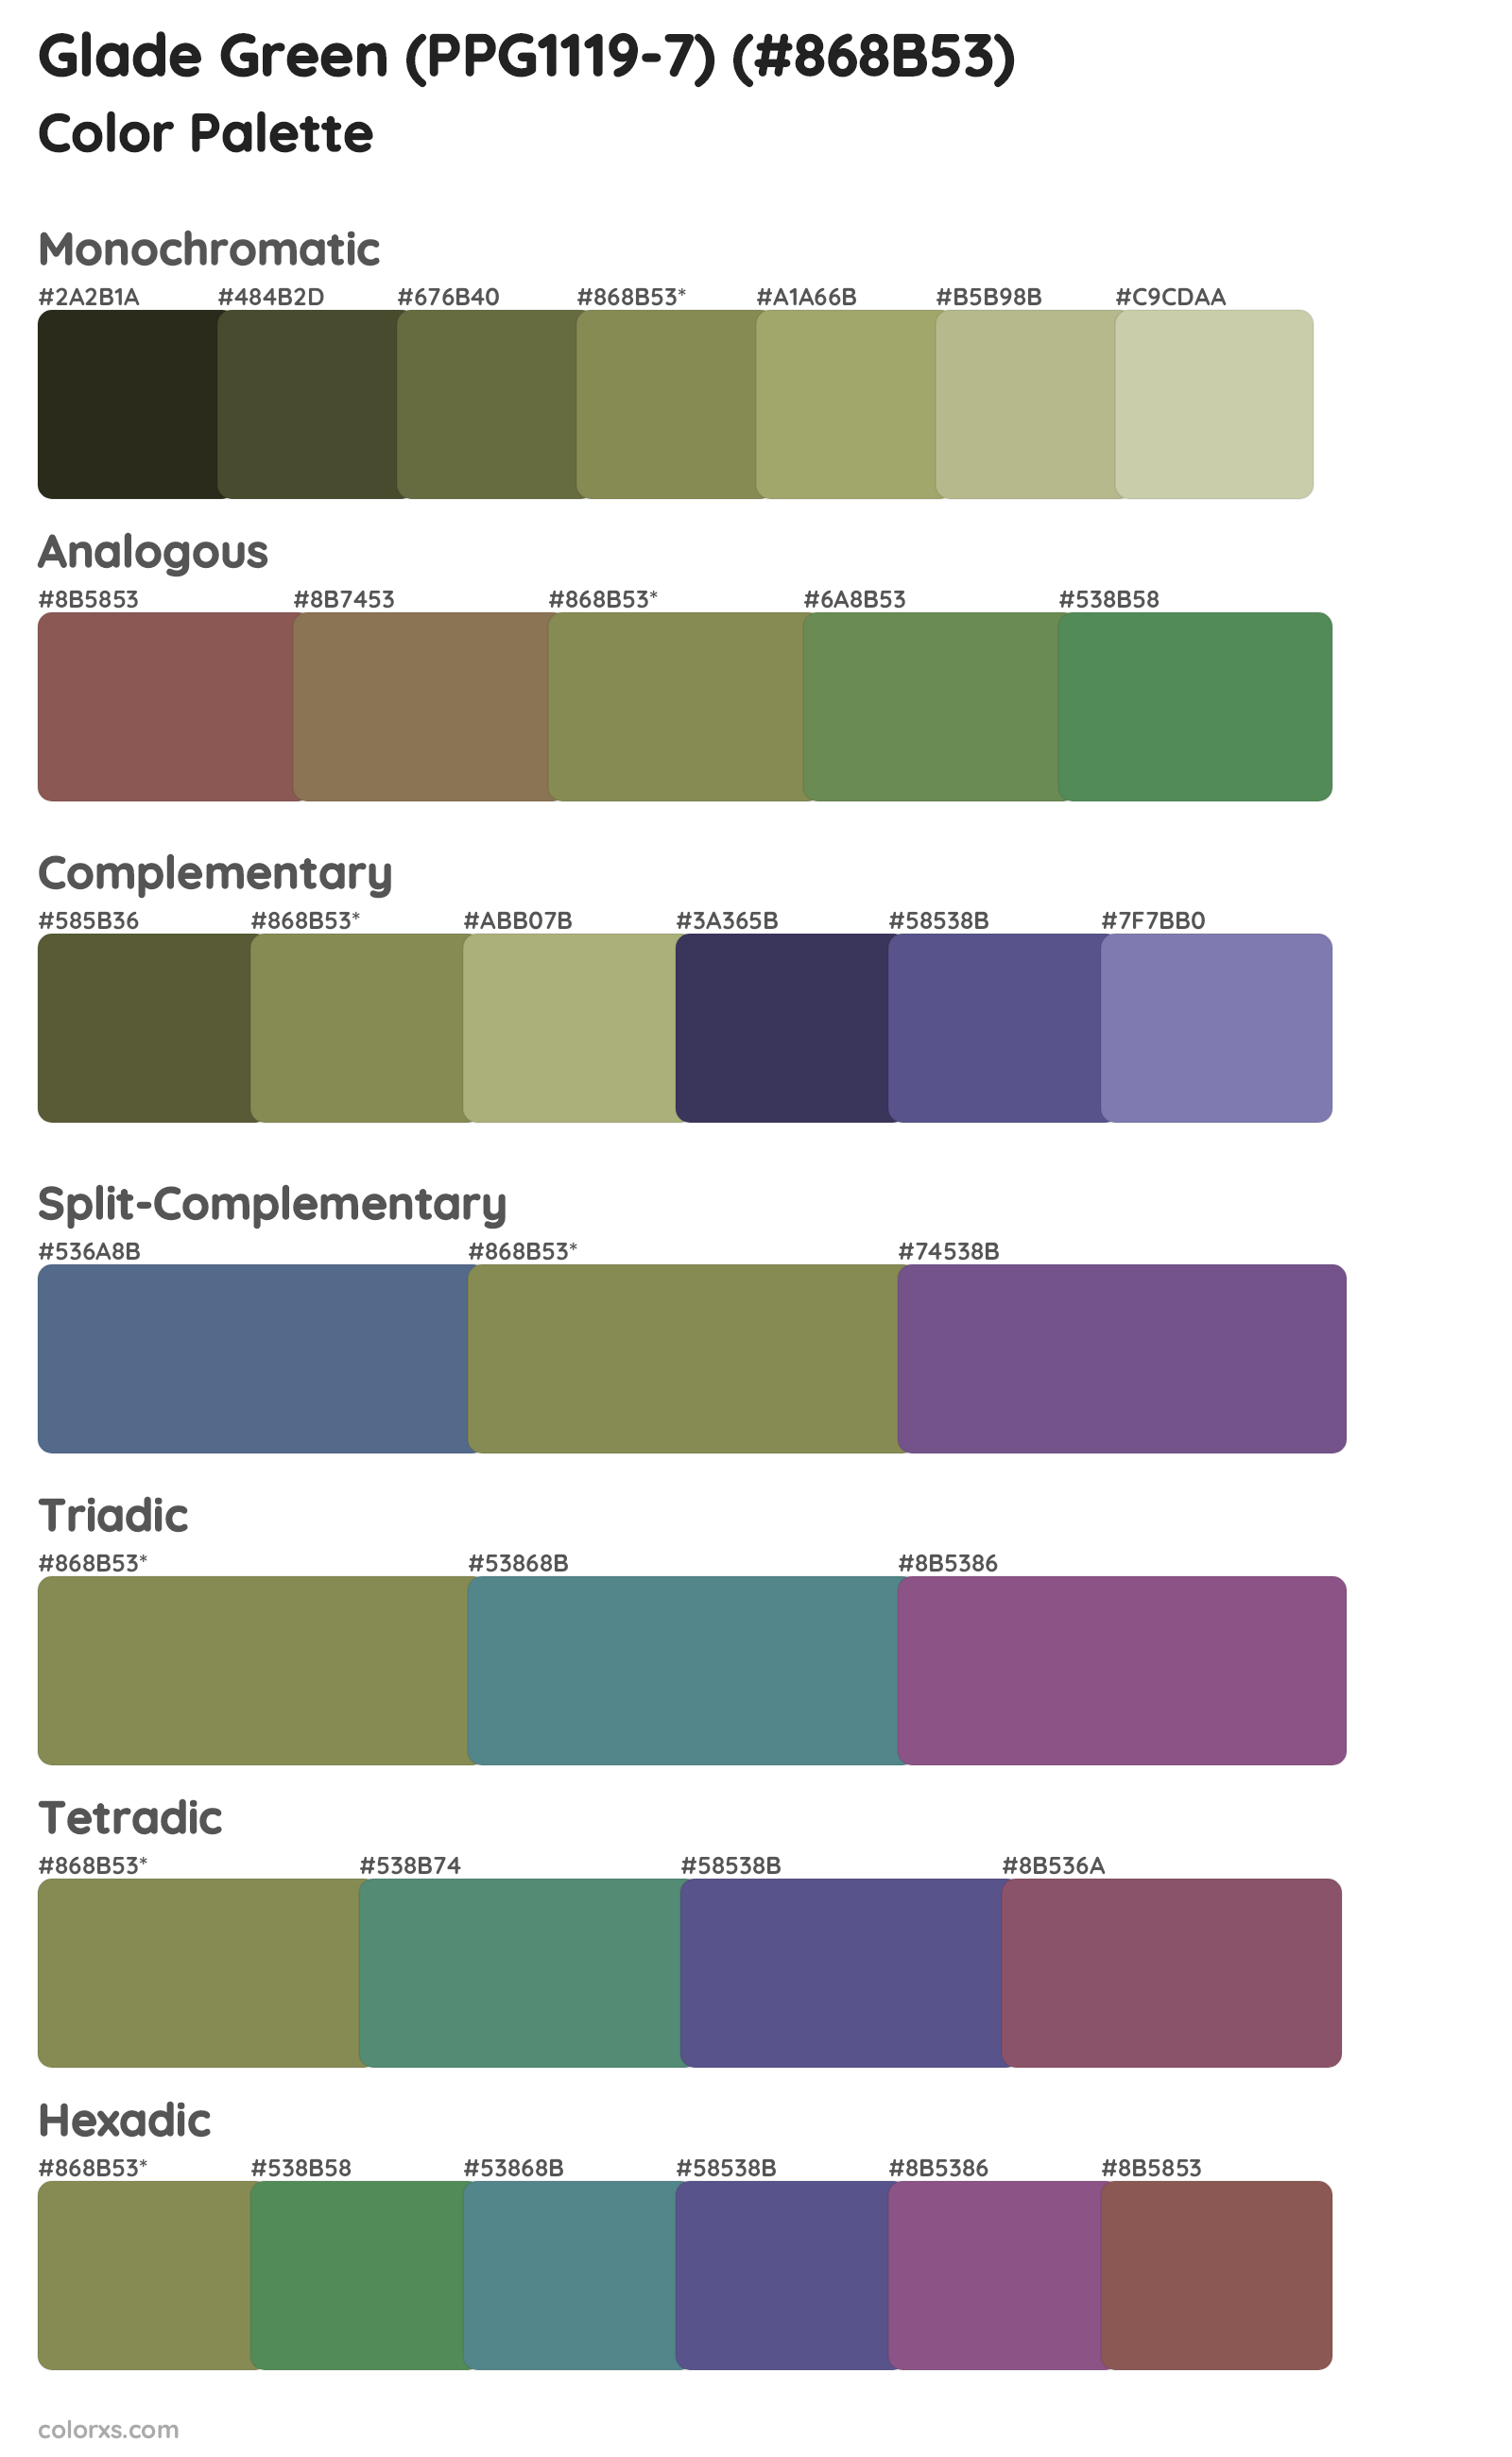 Glade Green (PPG1119-7) Color Scheme Palettes